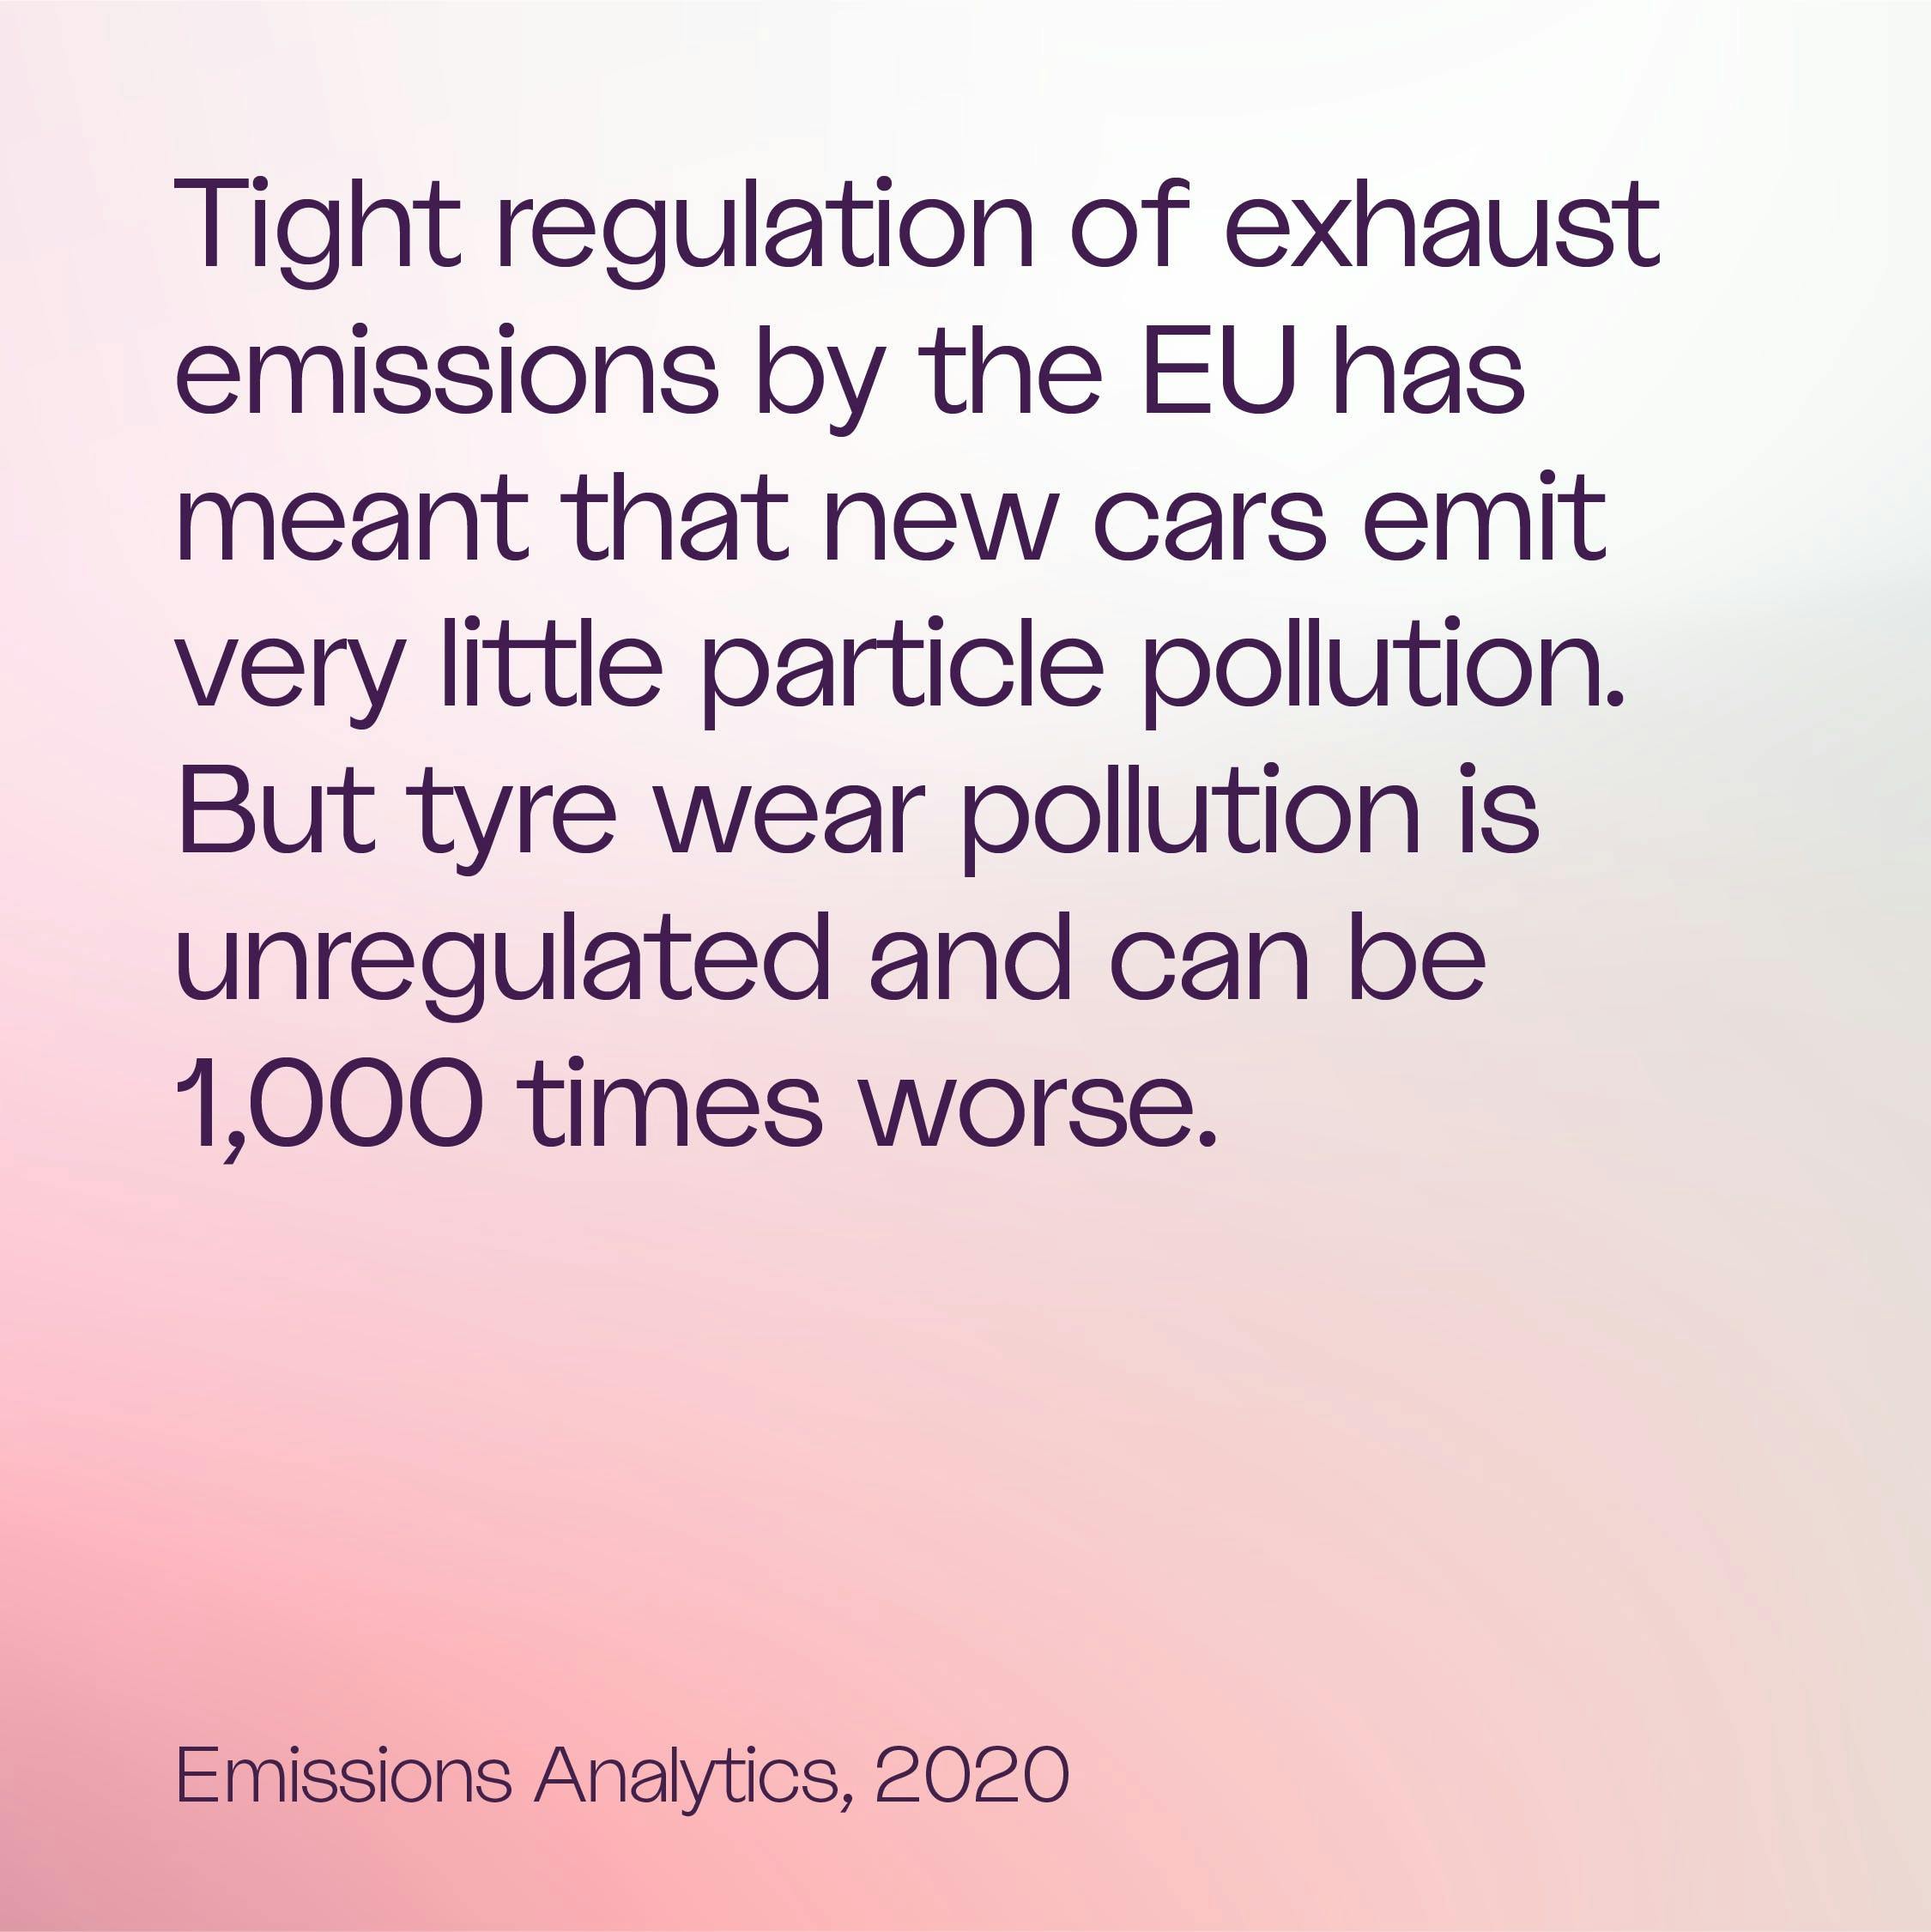 Source: Emissions Analytics Journal